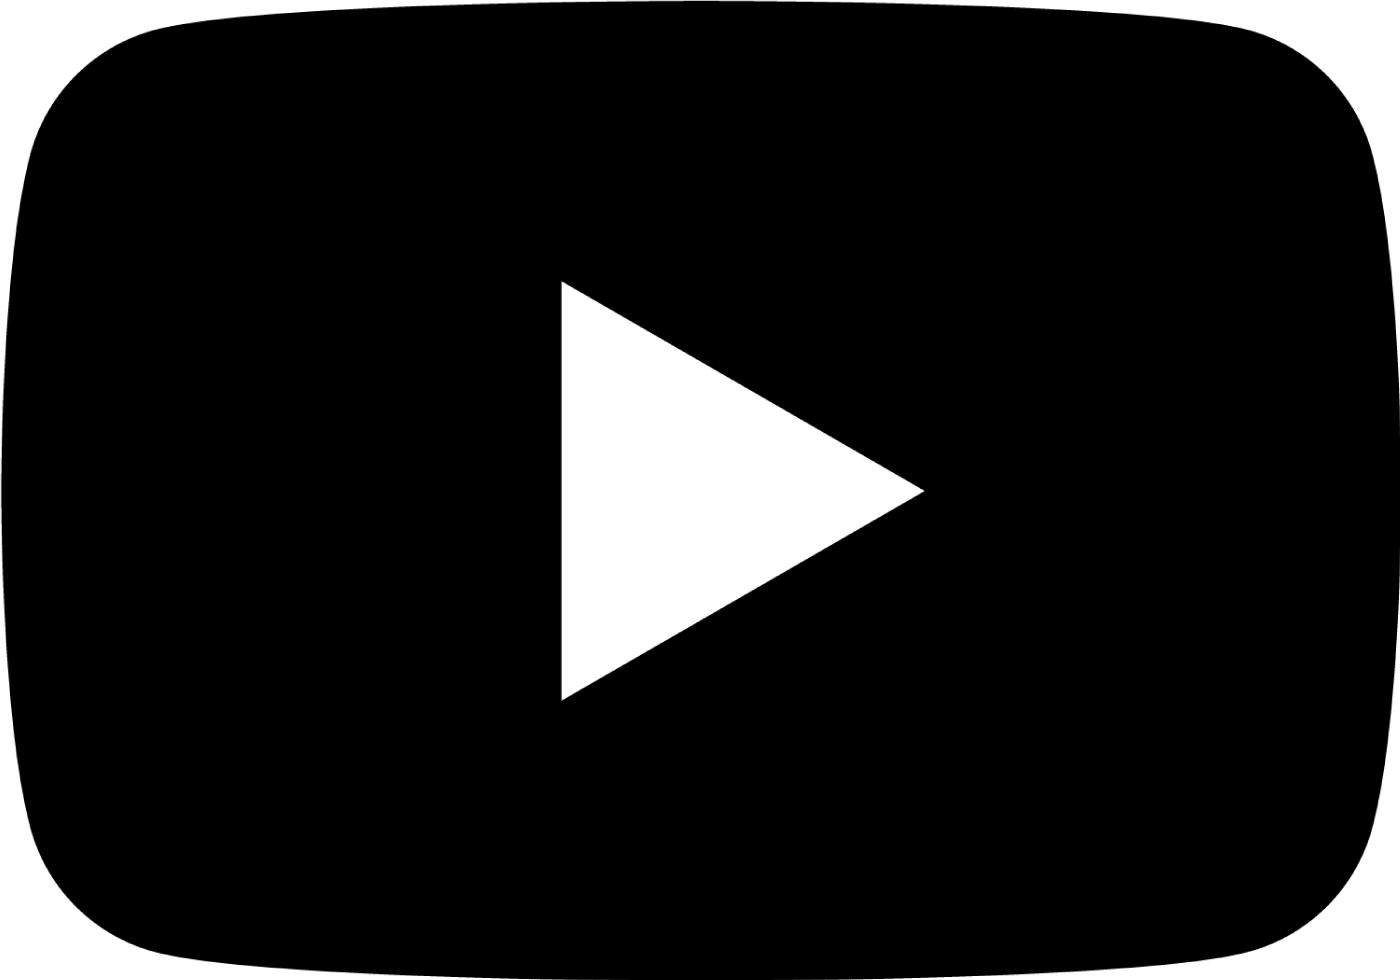 youtube logo black and white